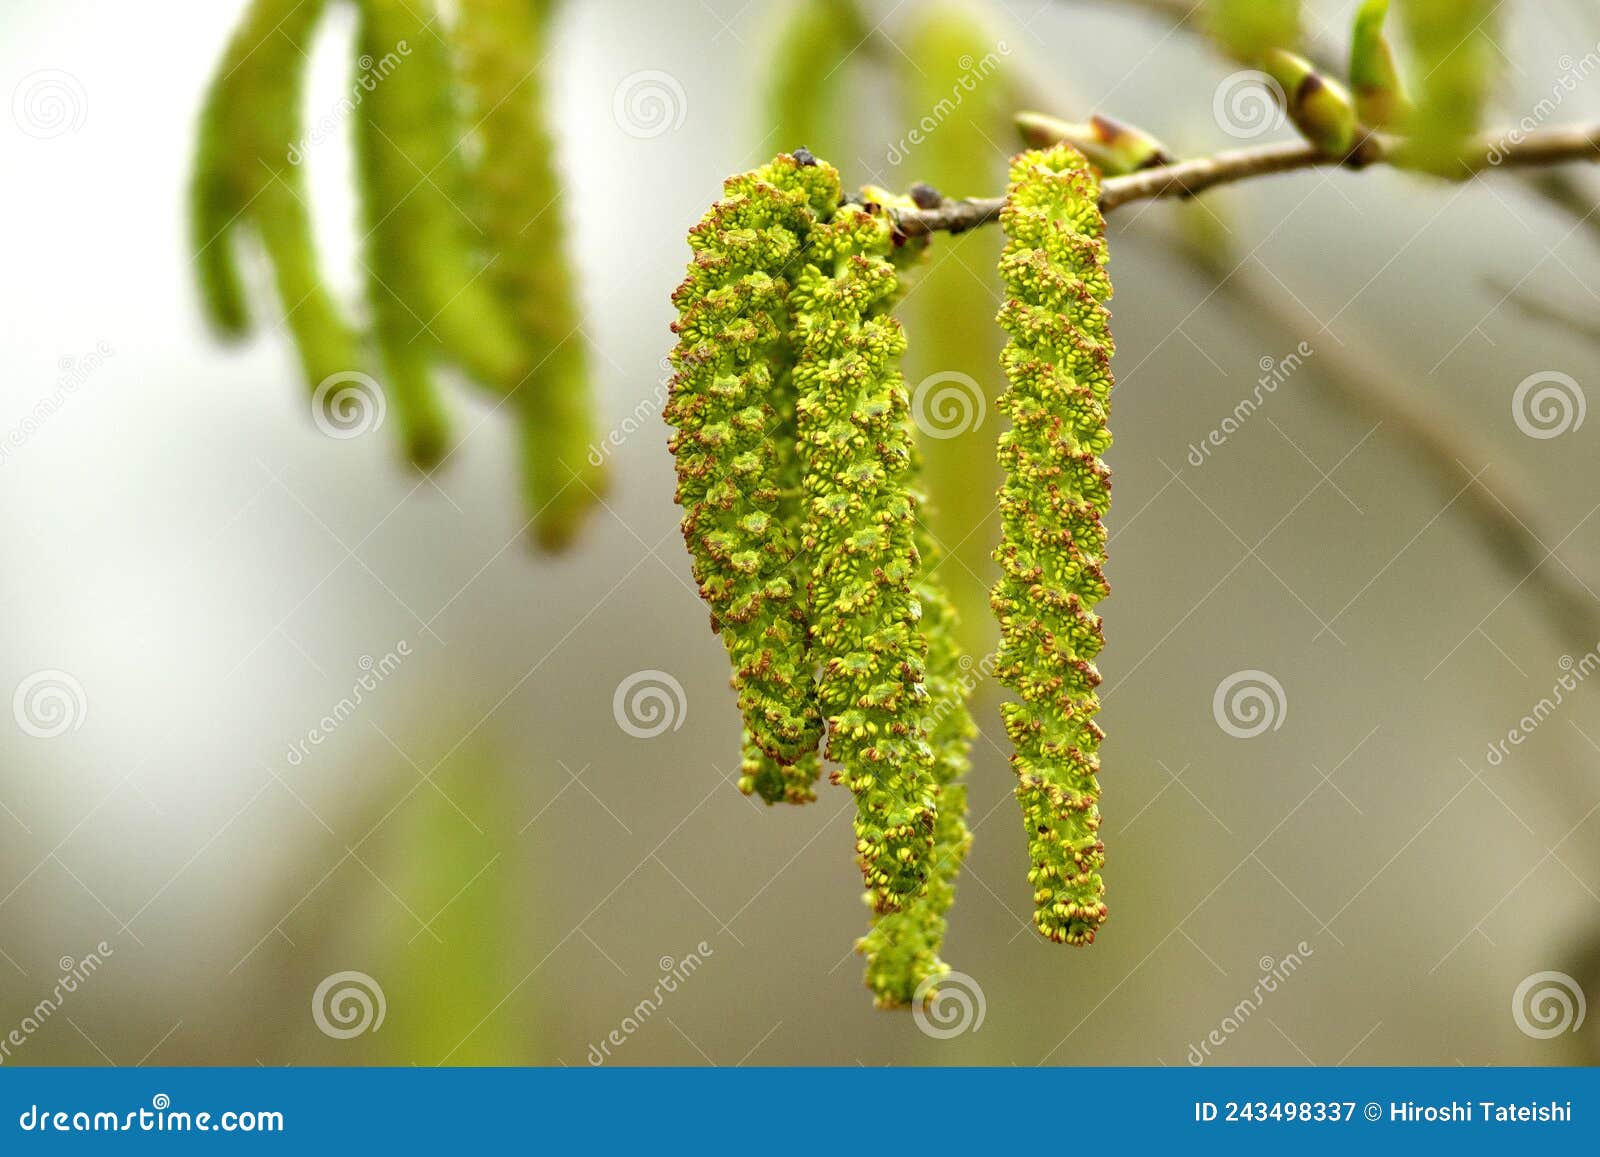 flowers of firma alder or asian alder or japanese green alder or alnus firma in spring